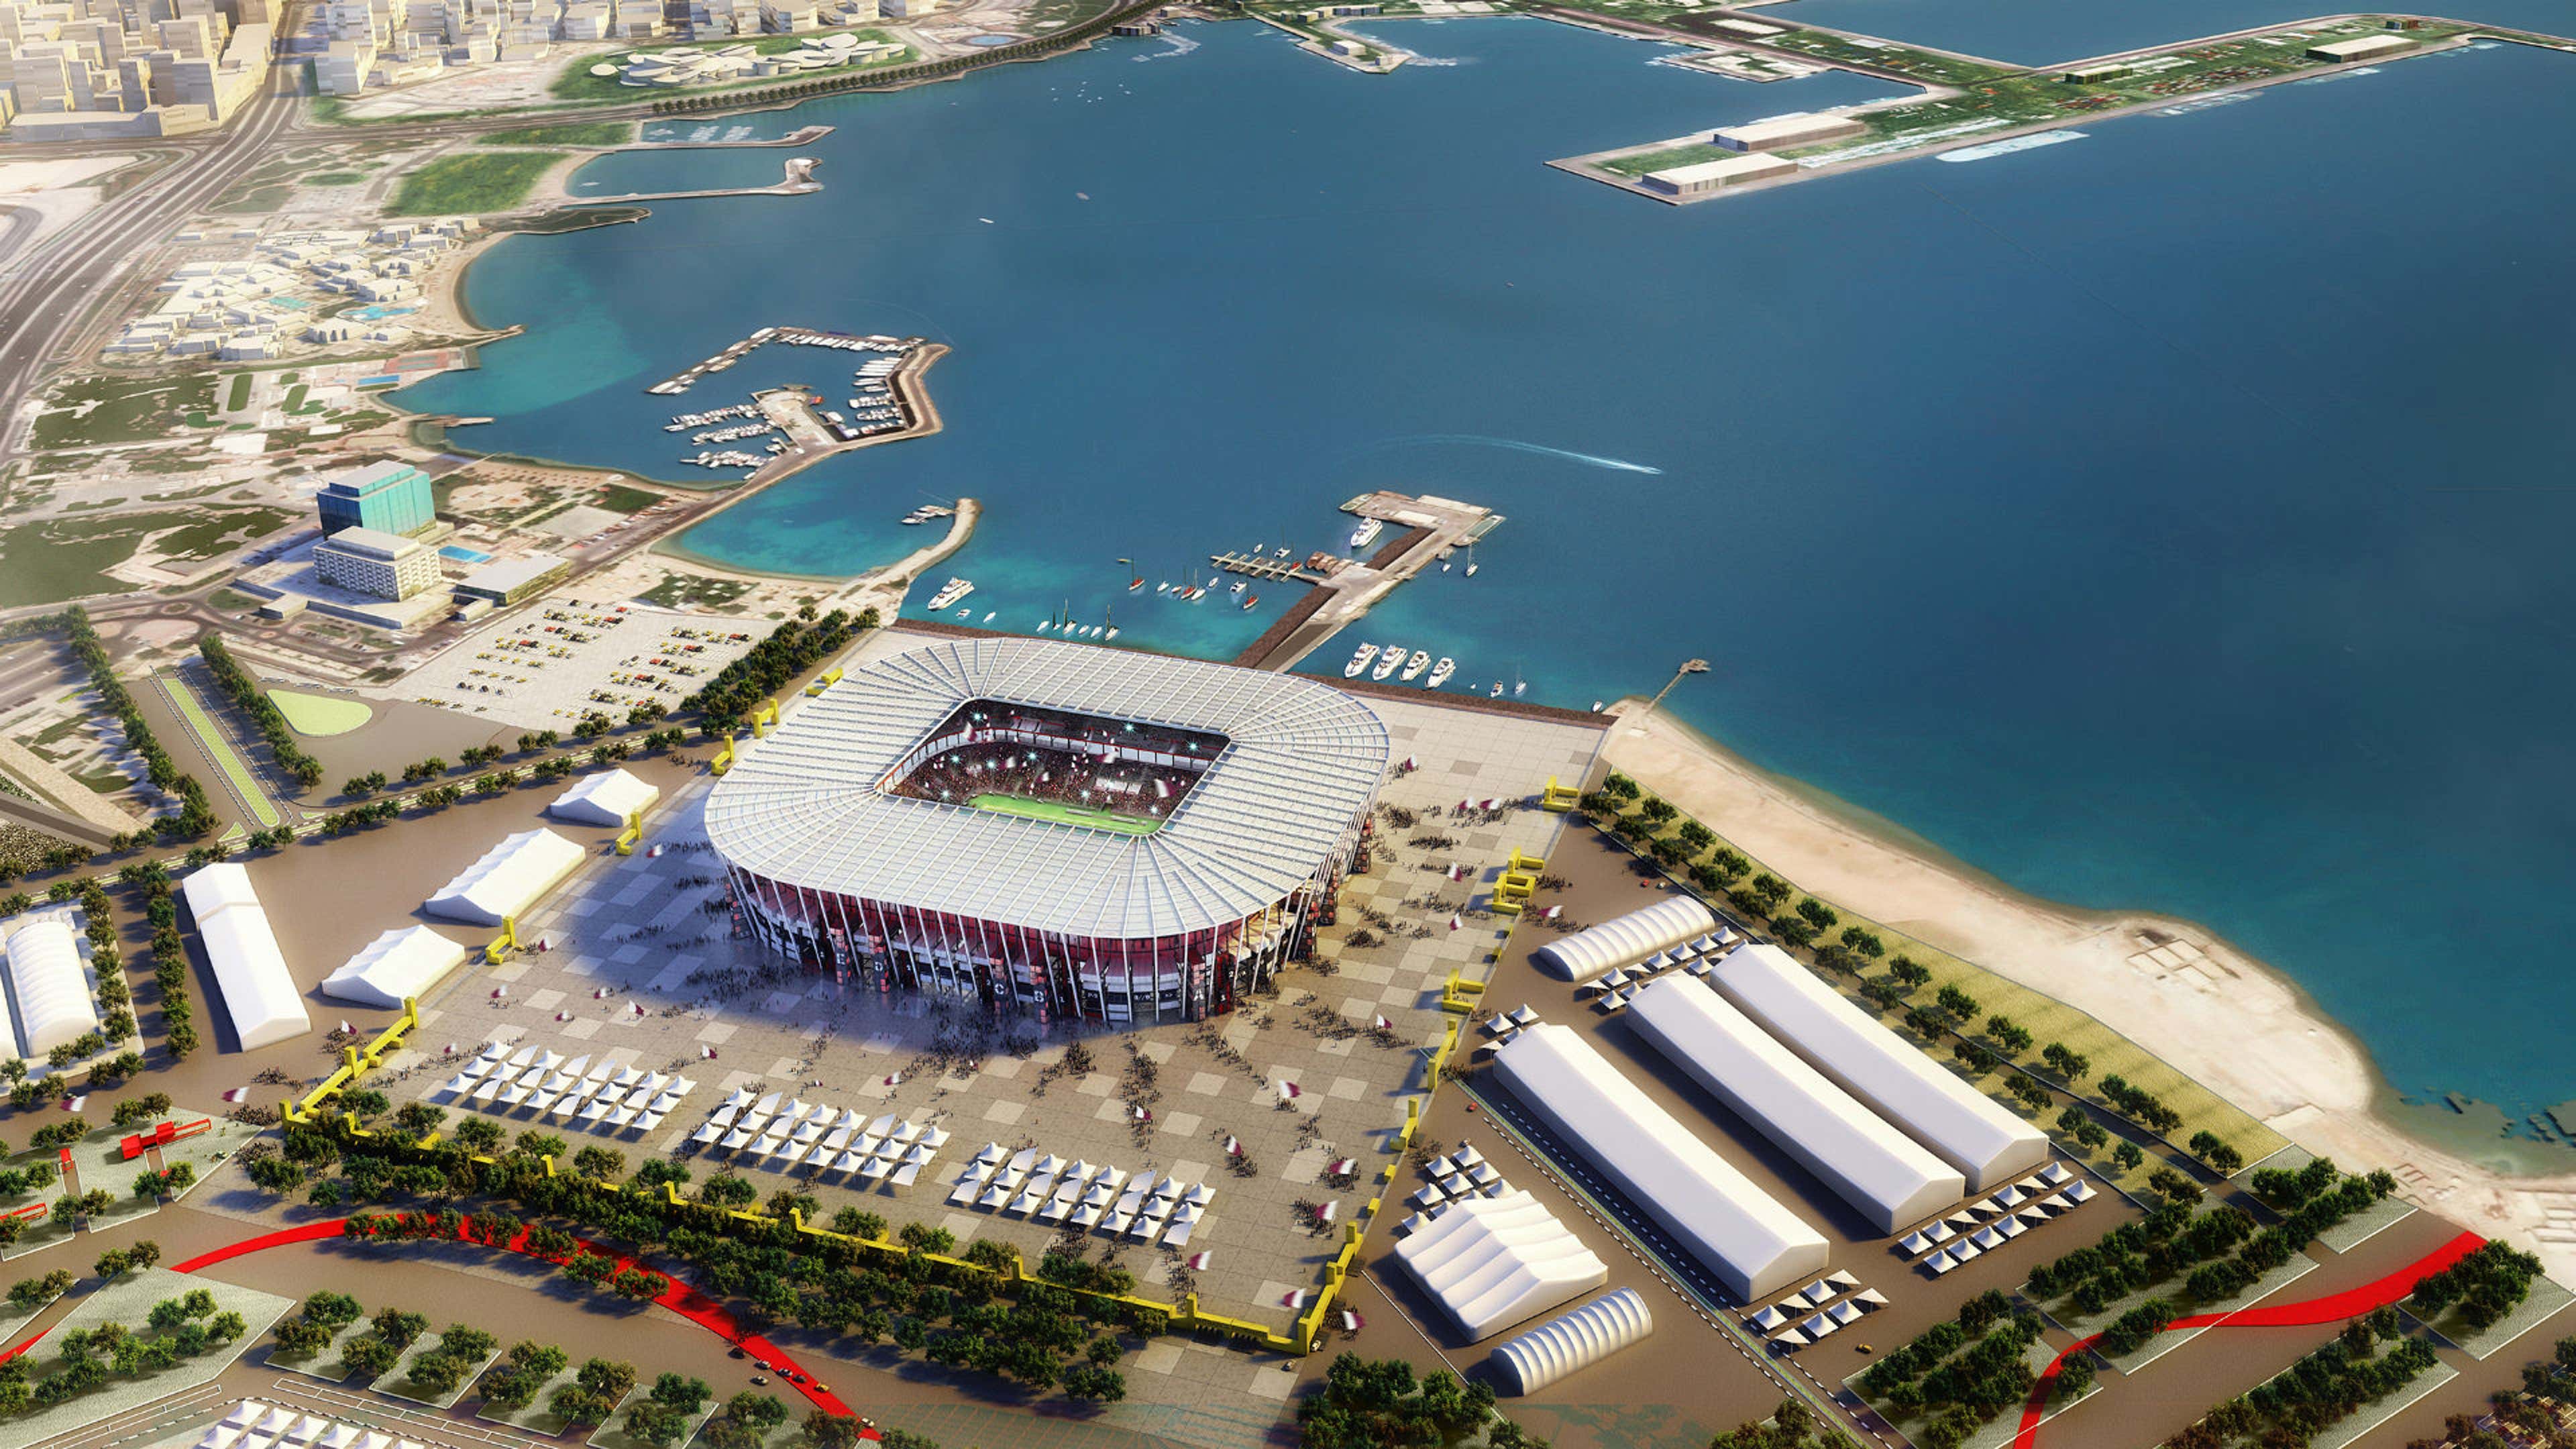 Ras Abu Aboud Stadium Qatar 2022 World Cup